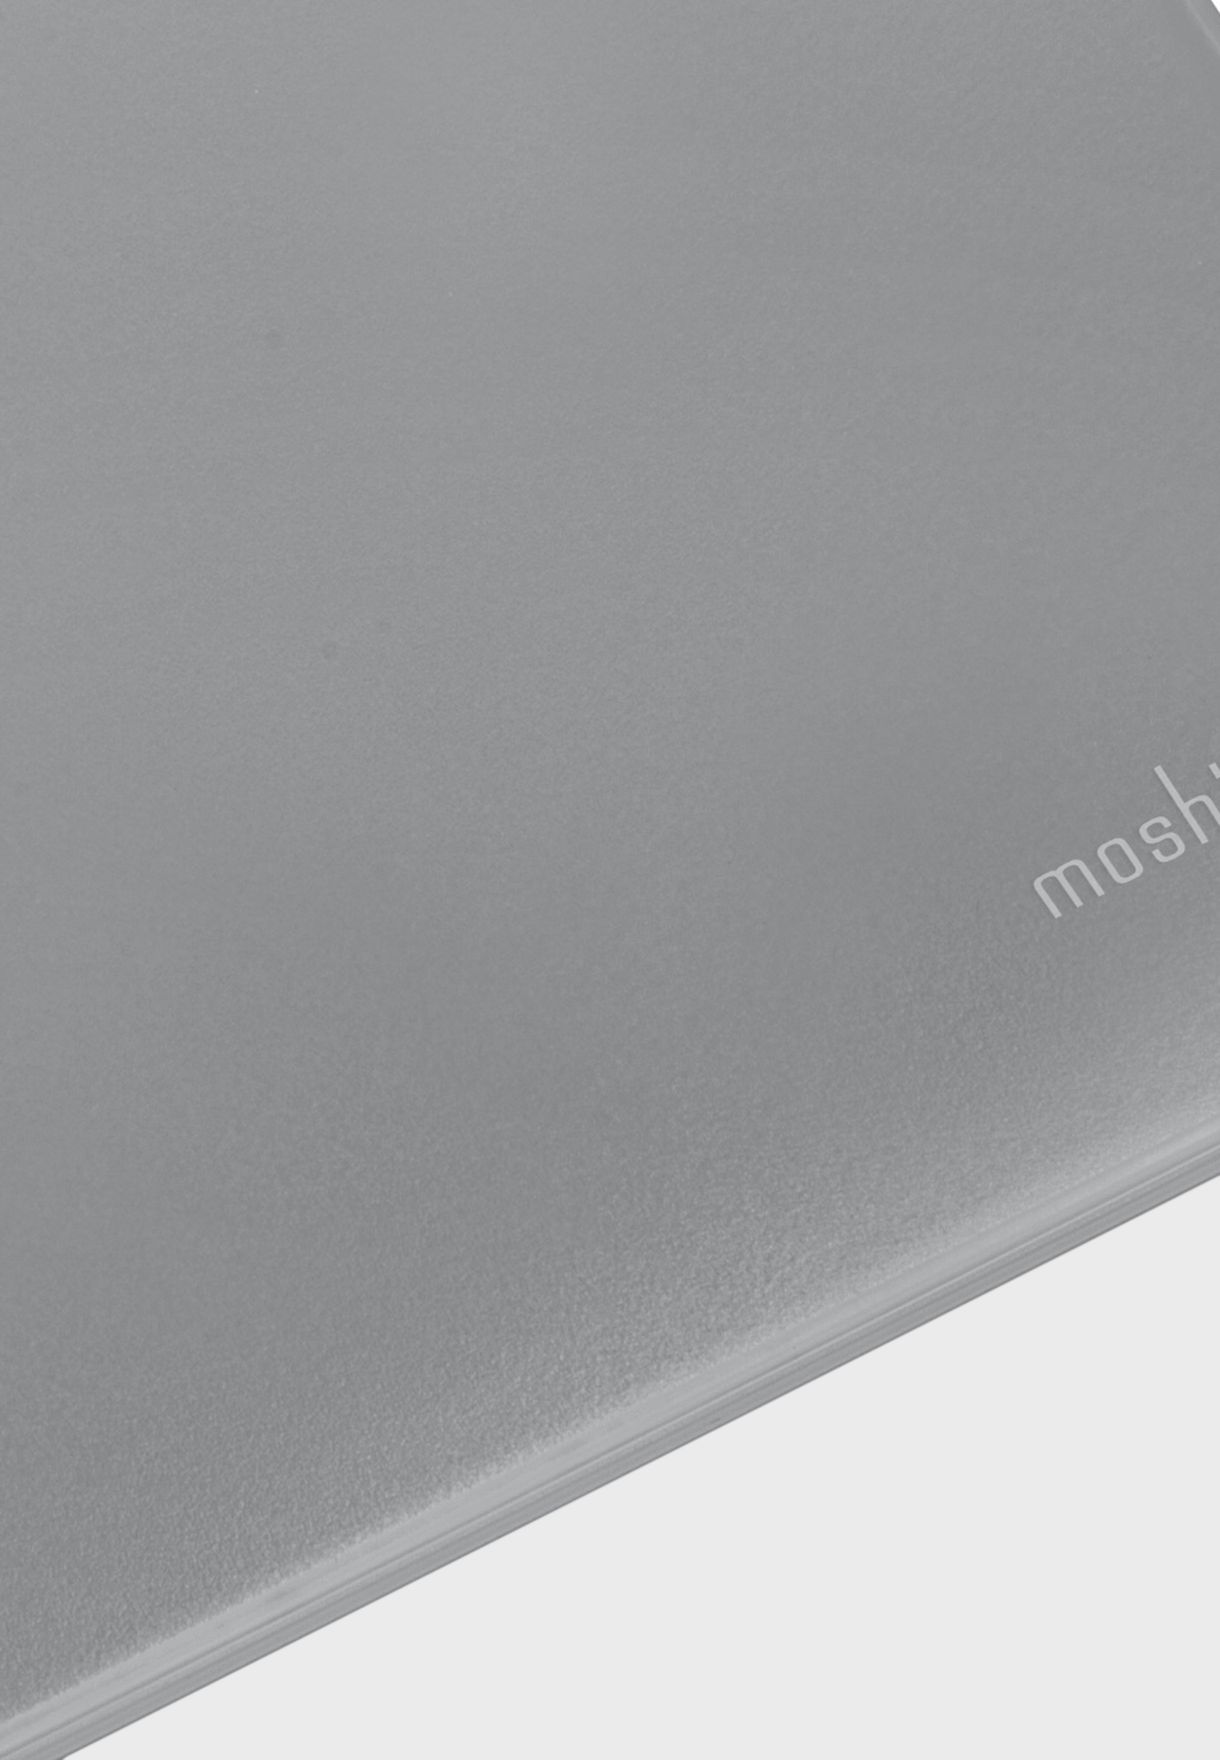 iGlaze For Macbook Pro 15 Case